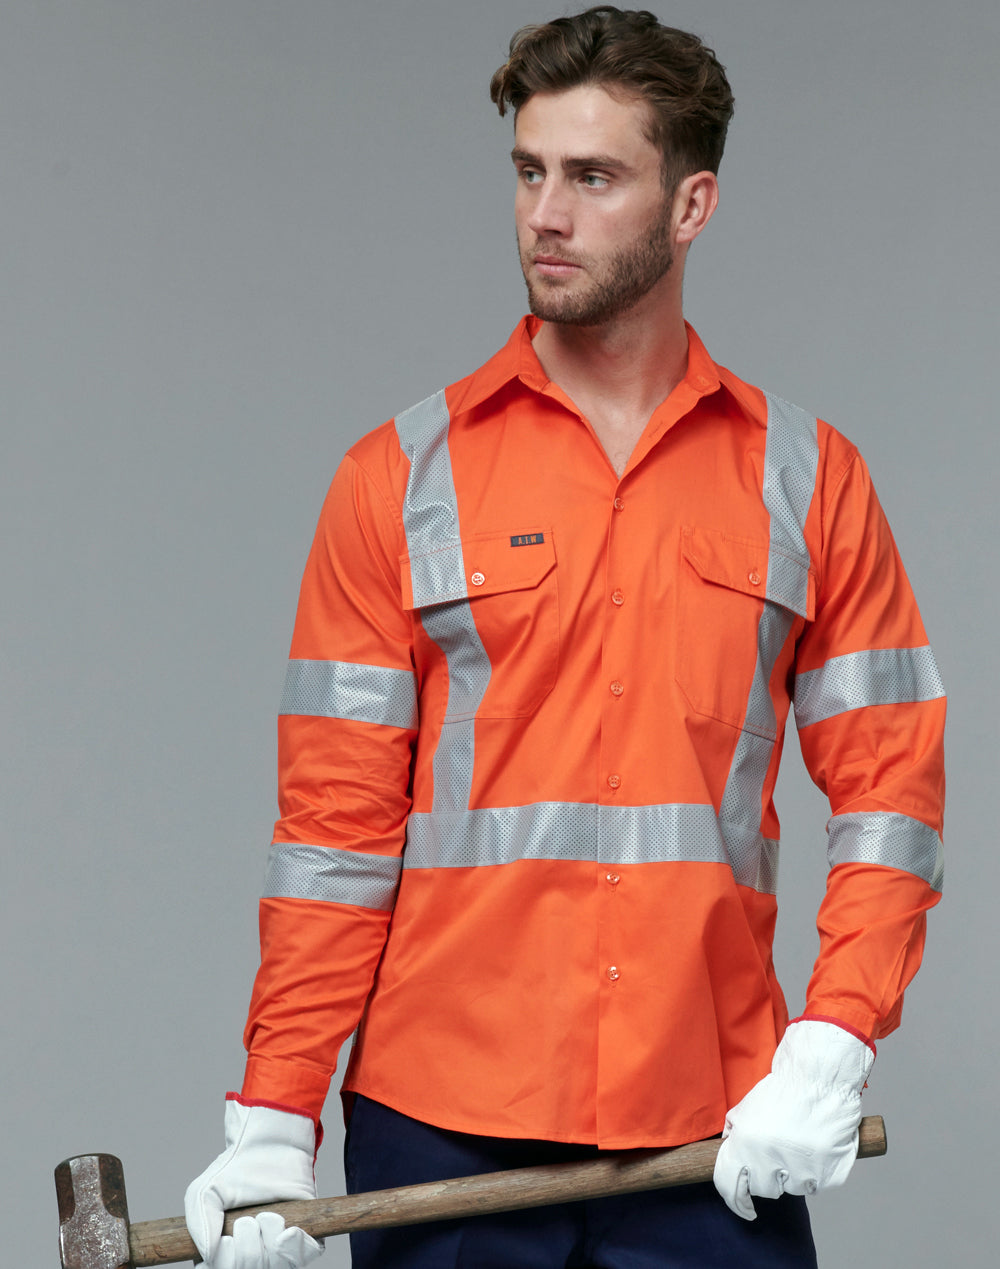 AIW- SW66 NSW Rail Lightweight Safety Shirt